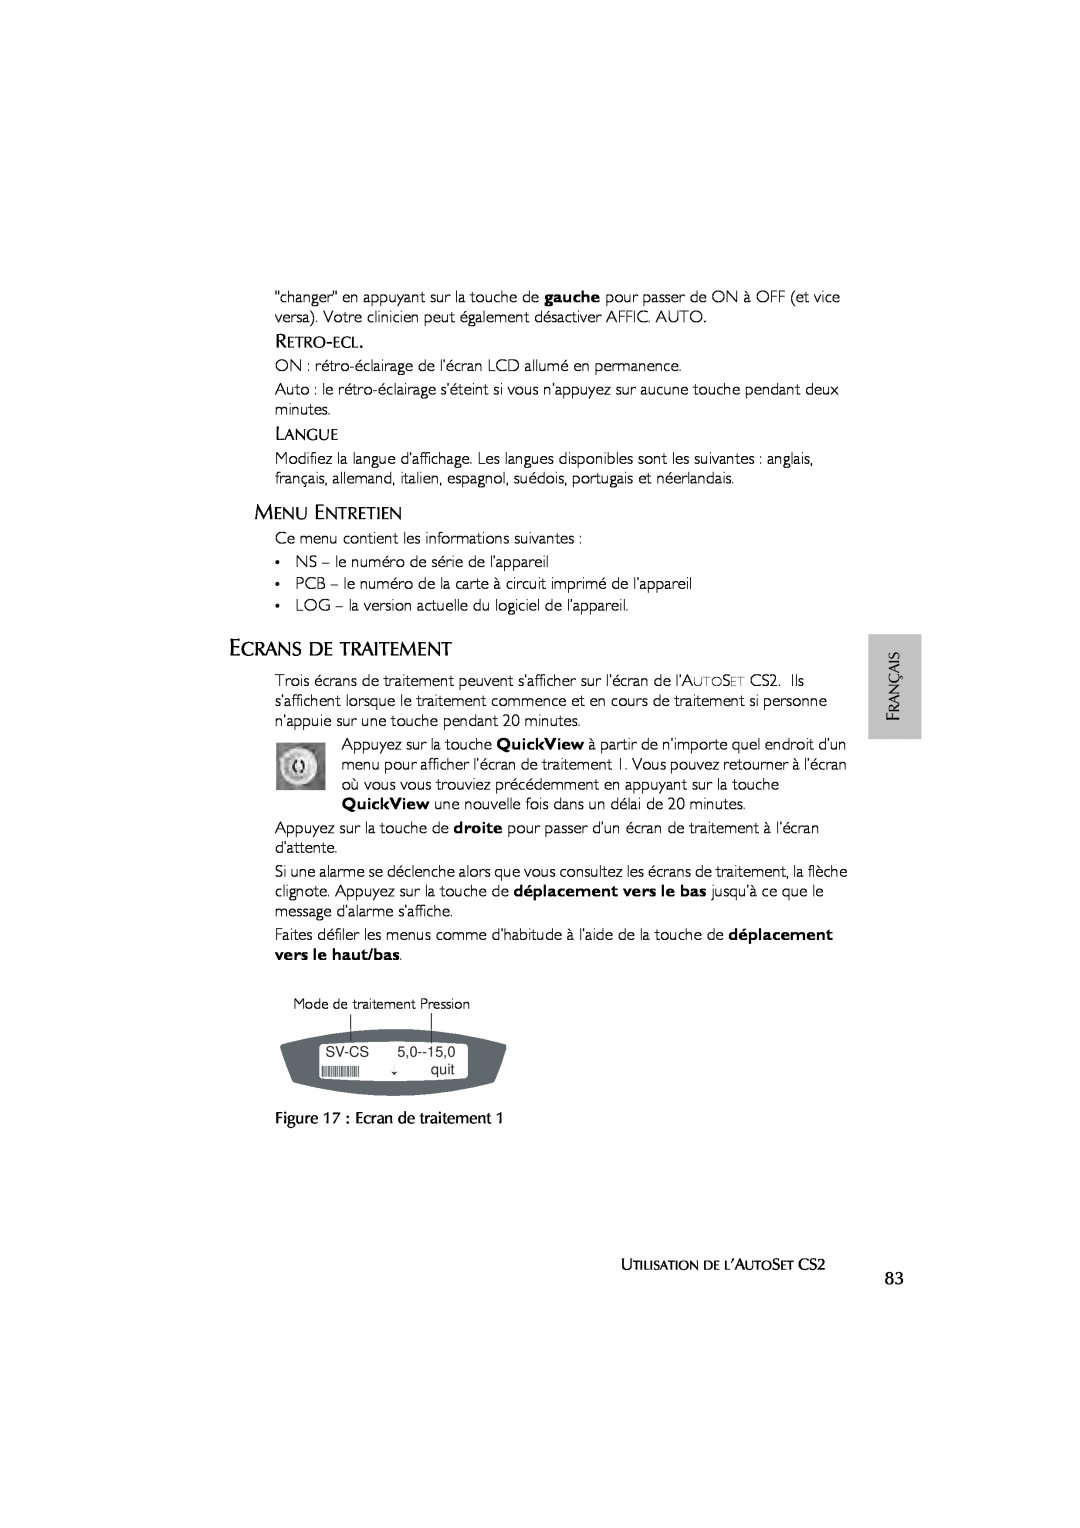 ResMed AutoSet CS 2 user manual Ecrans De Traitement 